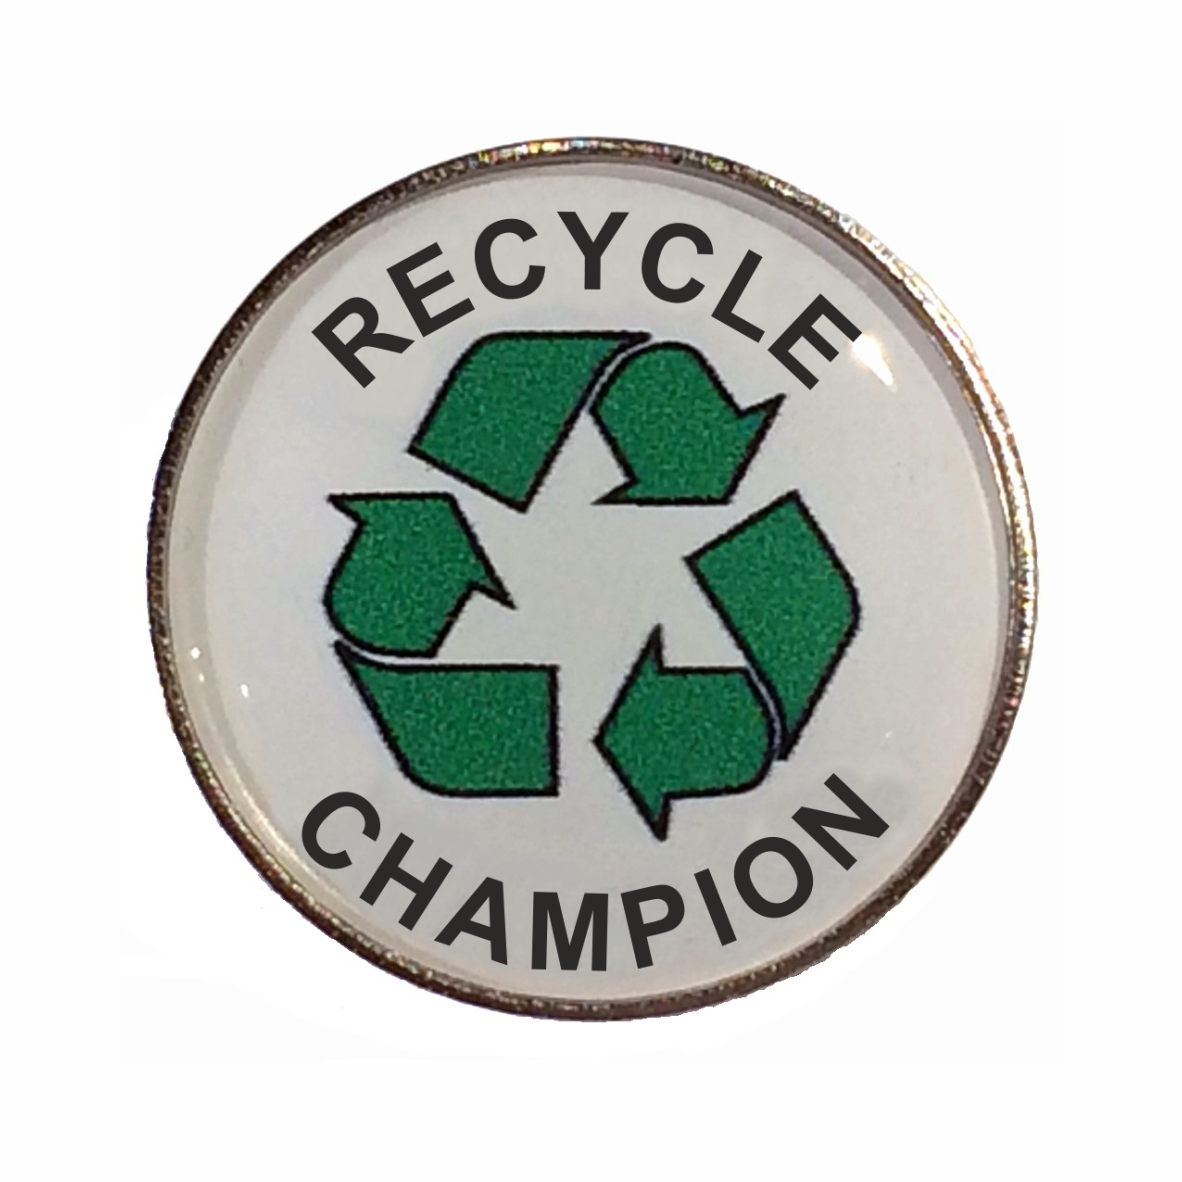 RECYCLE CHAMPION round badge